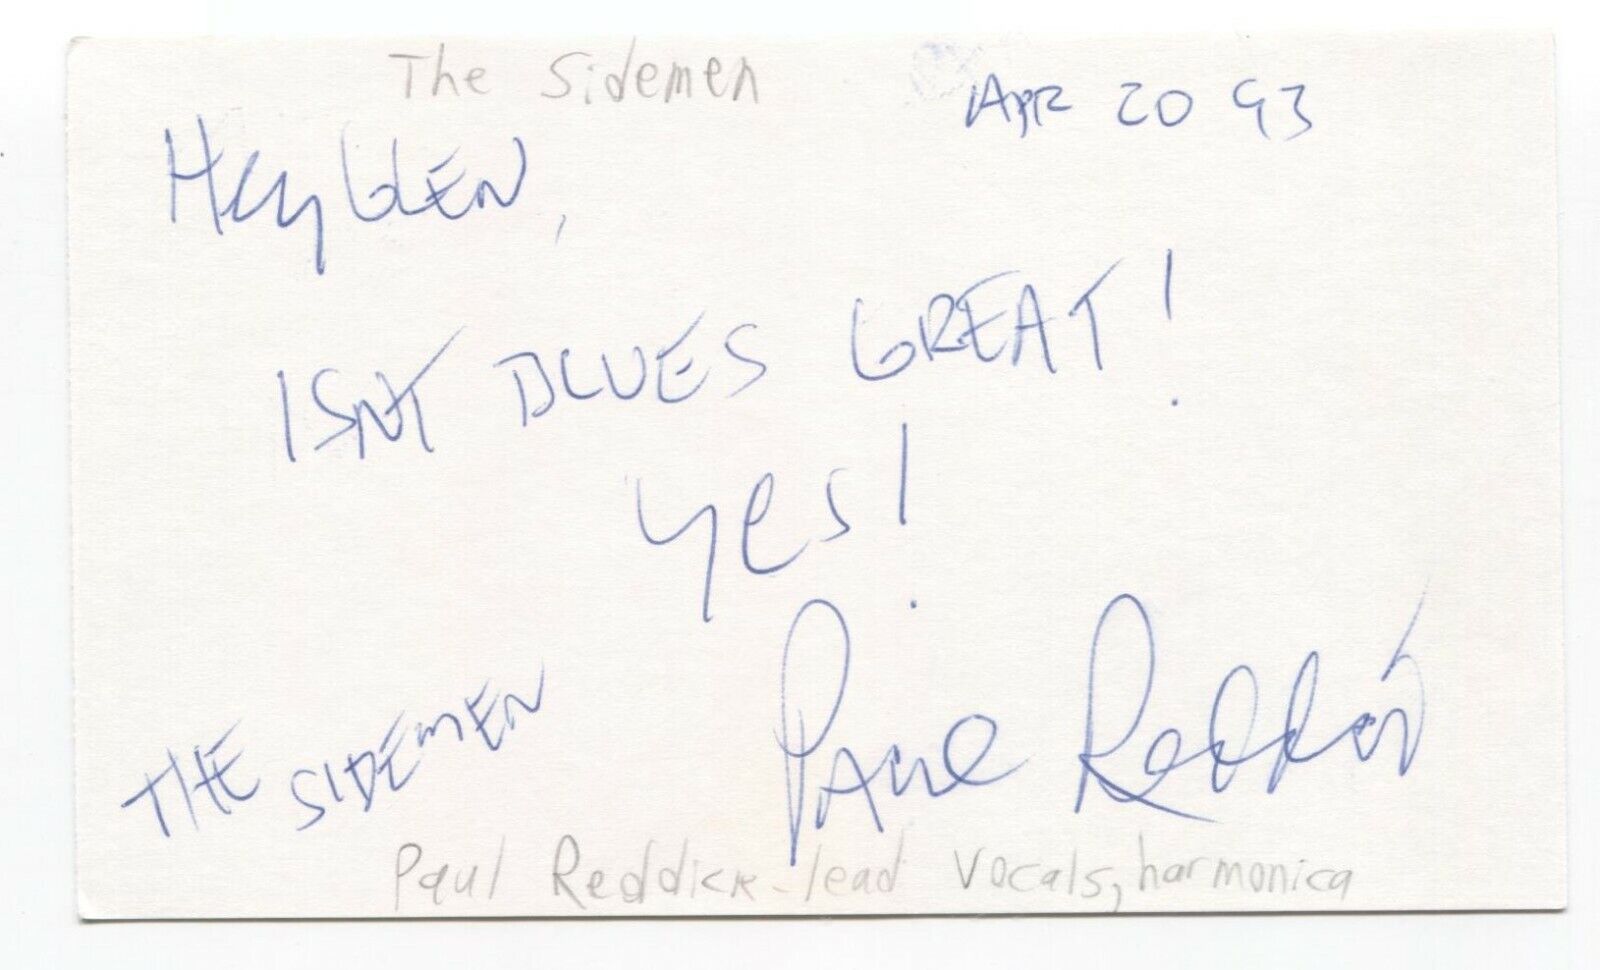 The Sidemen - Paul Reddick Signed 3x5 Index Card Autographed Signature Singer